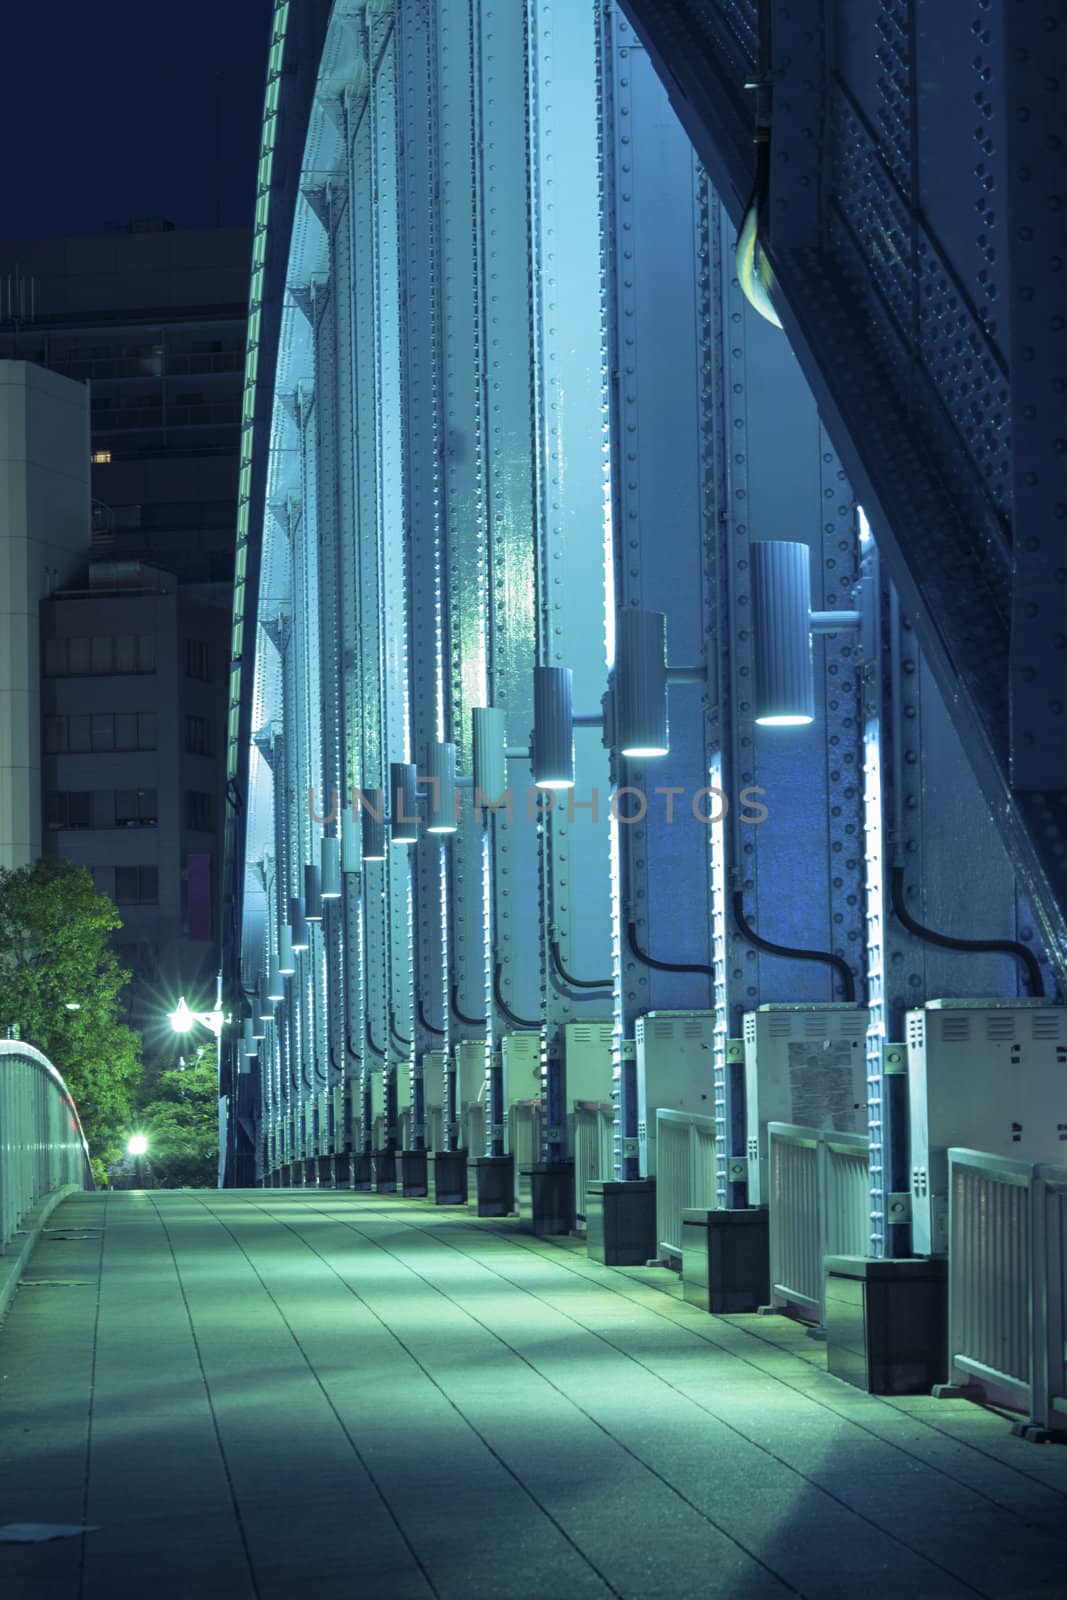 pedestrian way along the metallic arc structure of city bridge illuminated by night